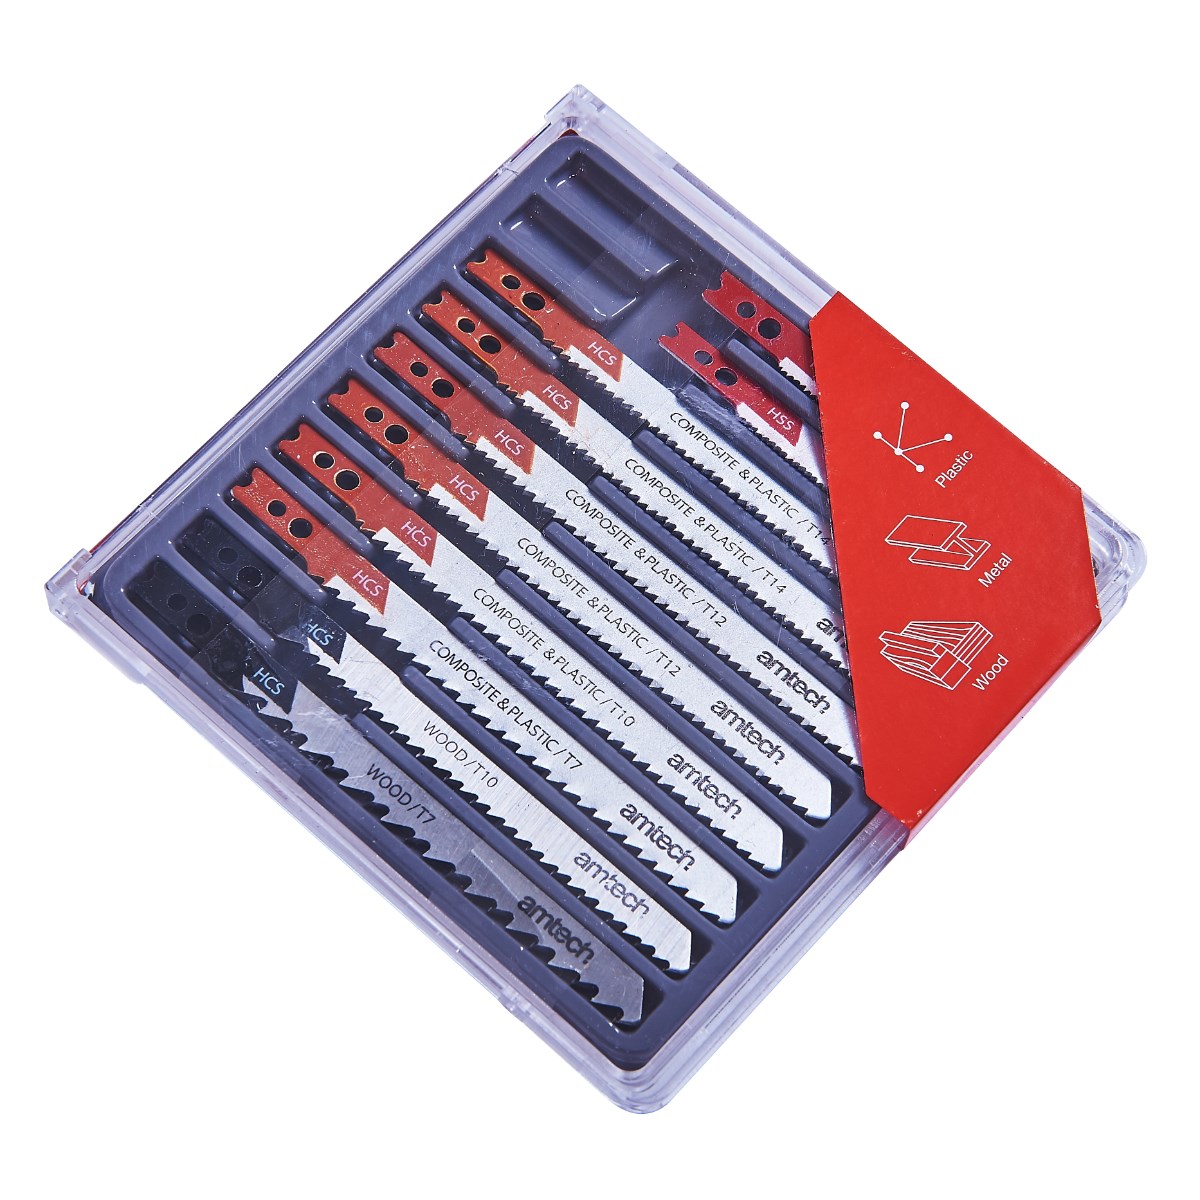 Amtech M1870 Set of 10 Mixed Jigsaw Blades for sale online